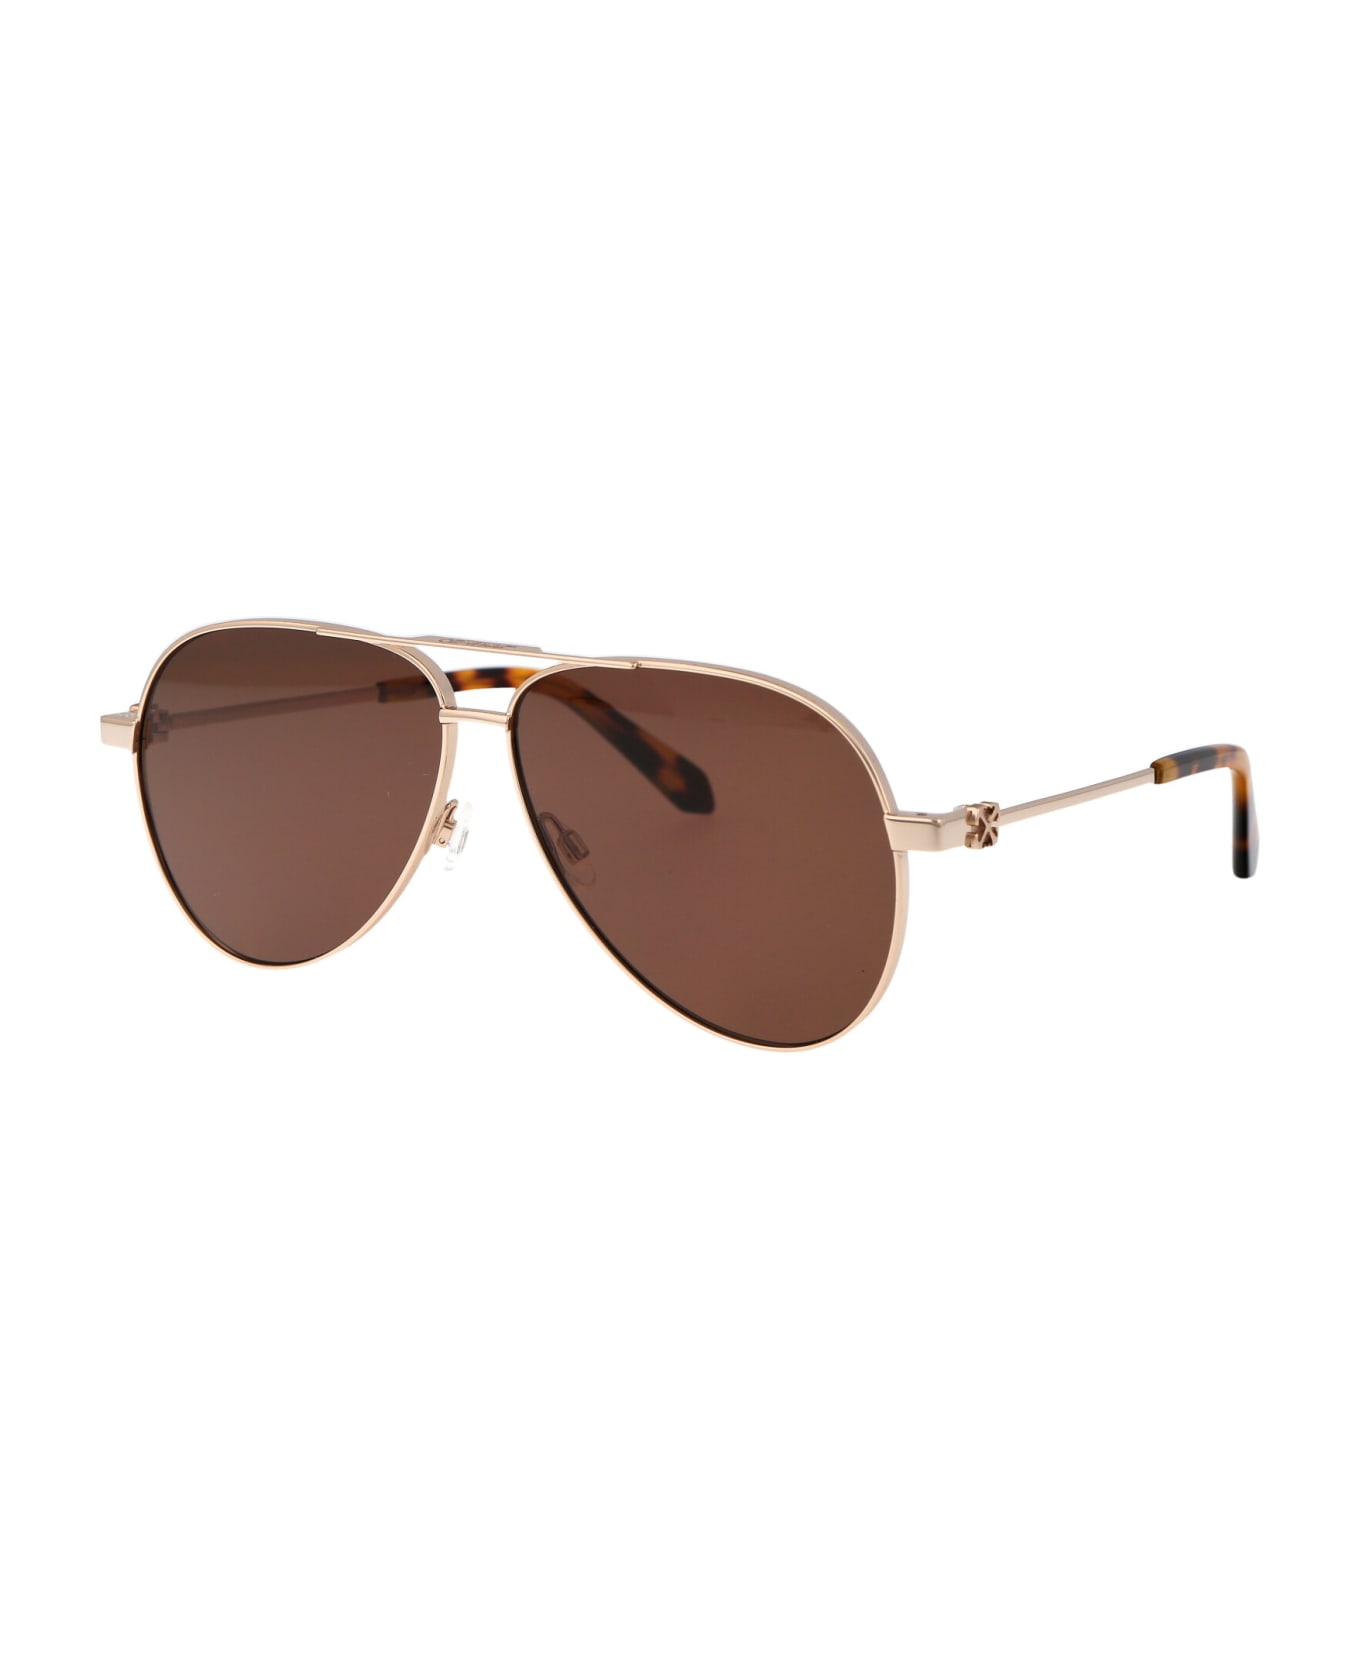 Off-White Ruston L Sunglasses - 7664 GOLD BROWN  サングラス